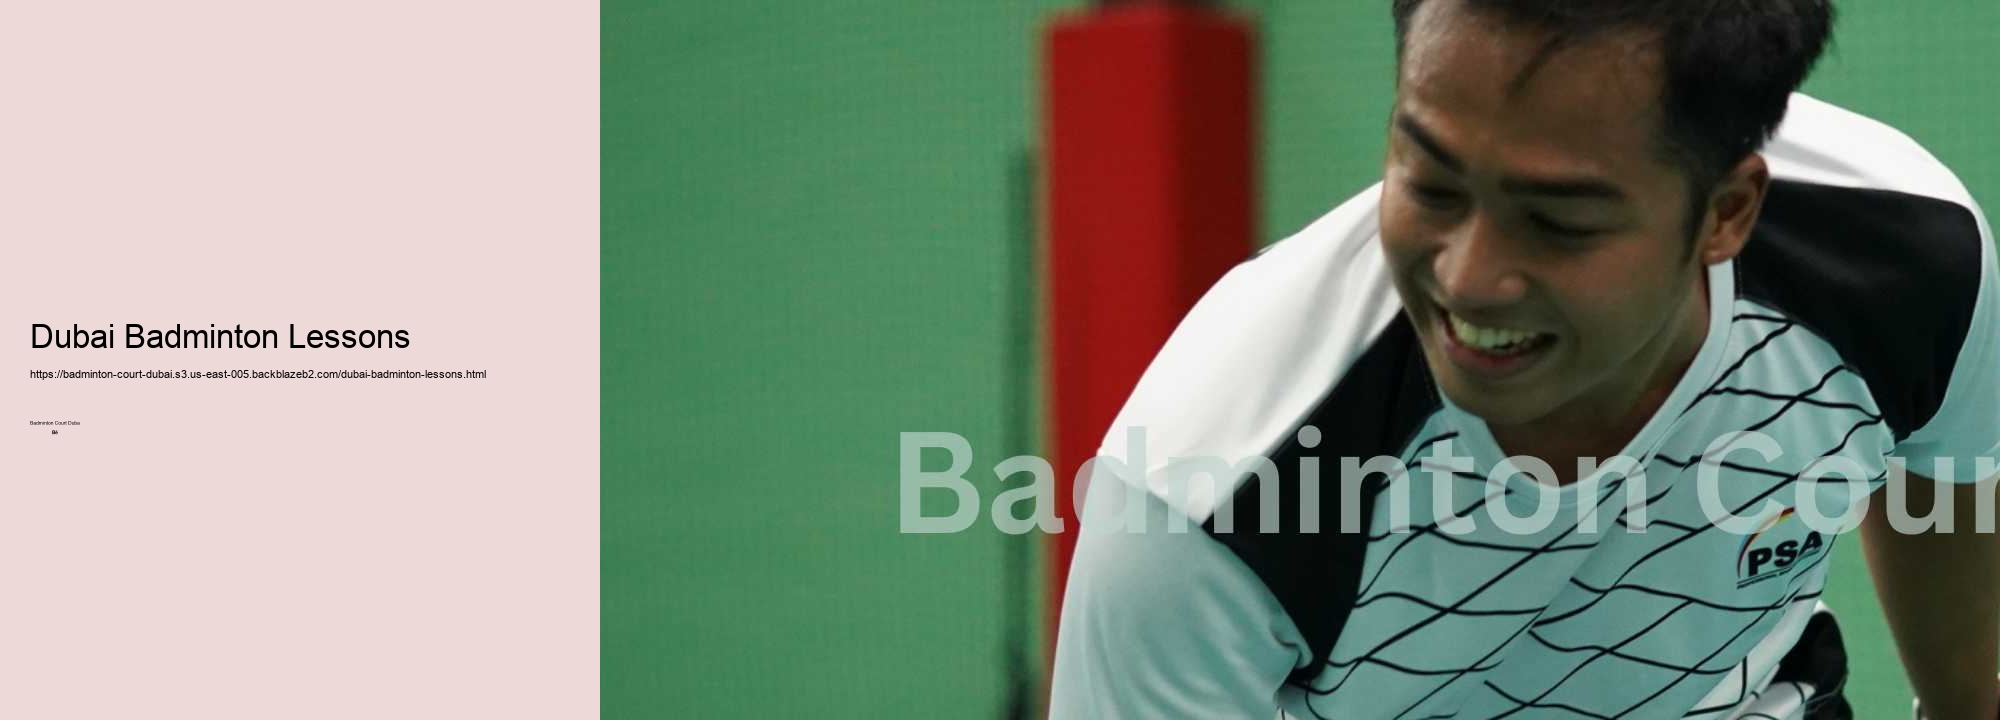 Dubai Badminton Lessons